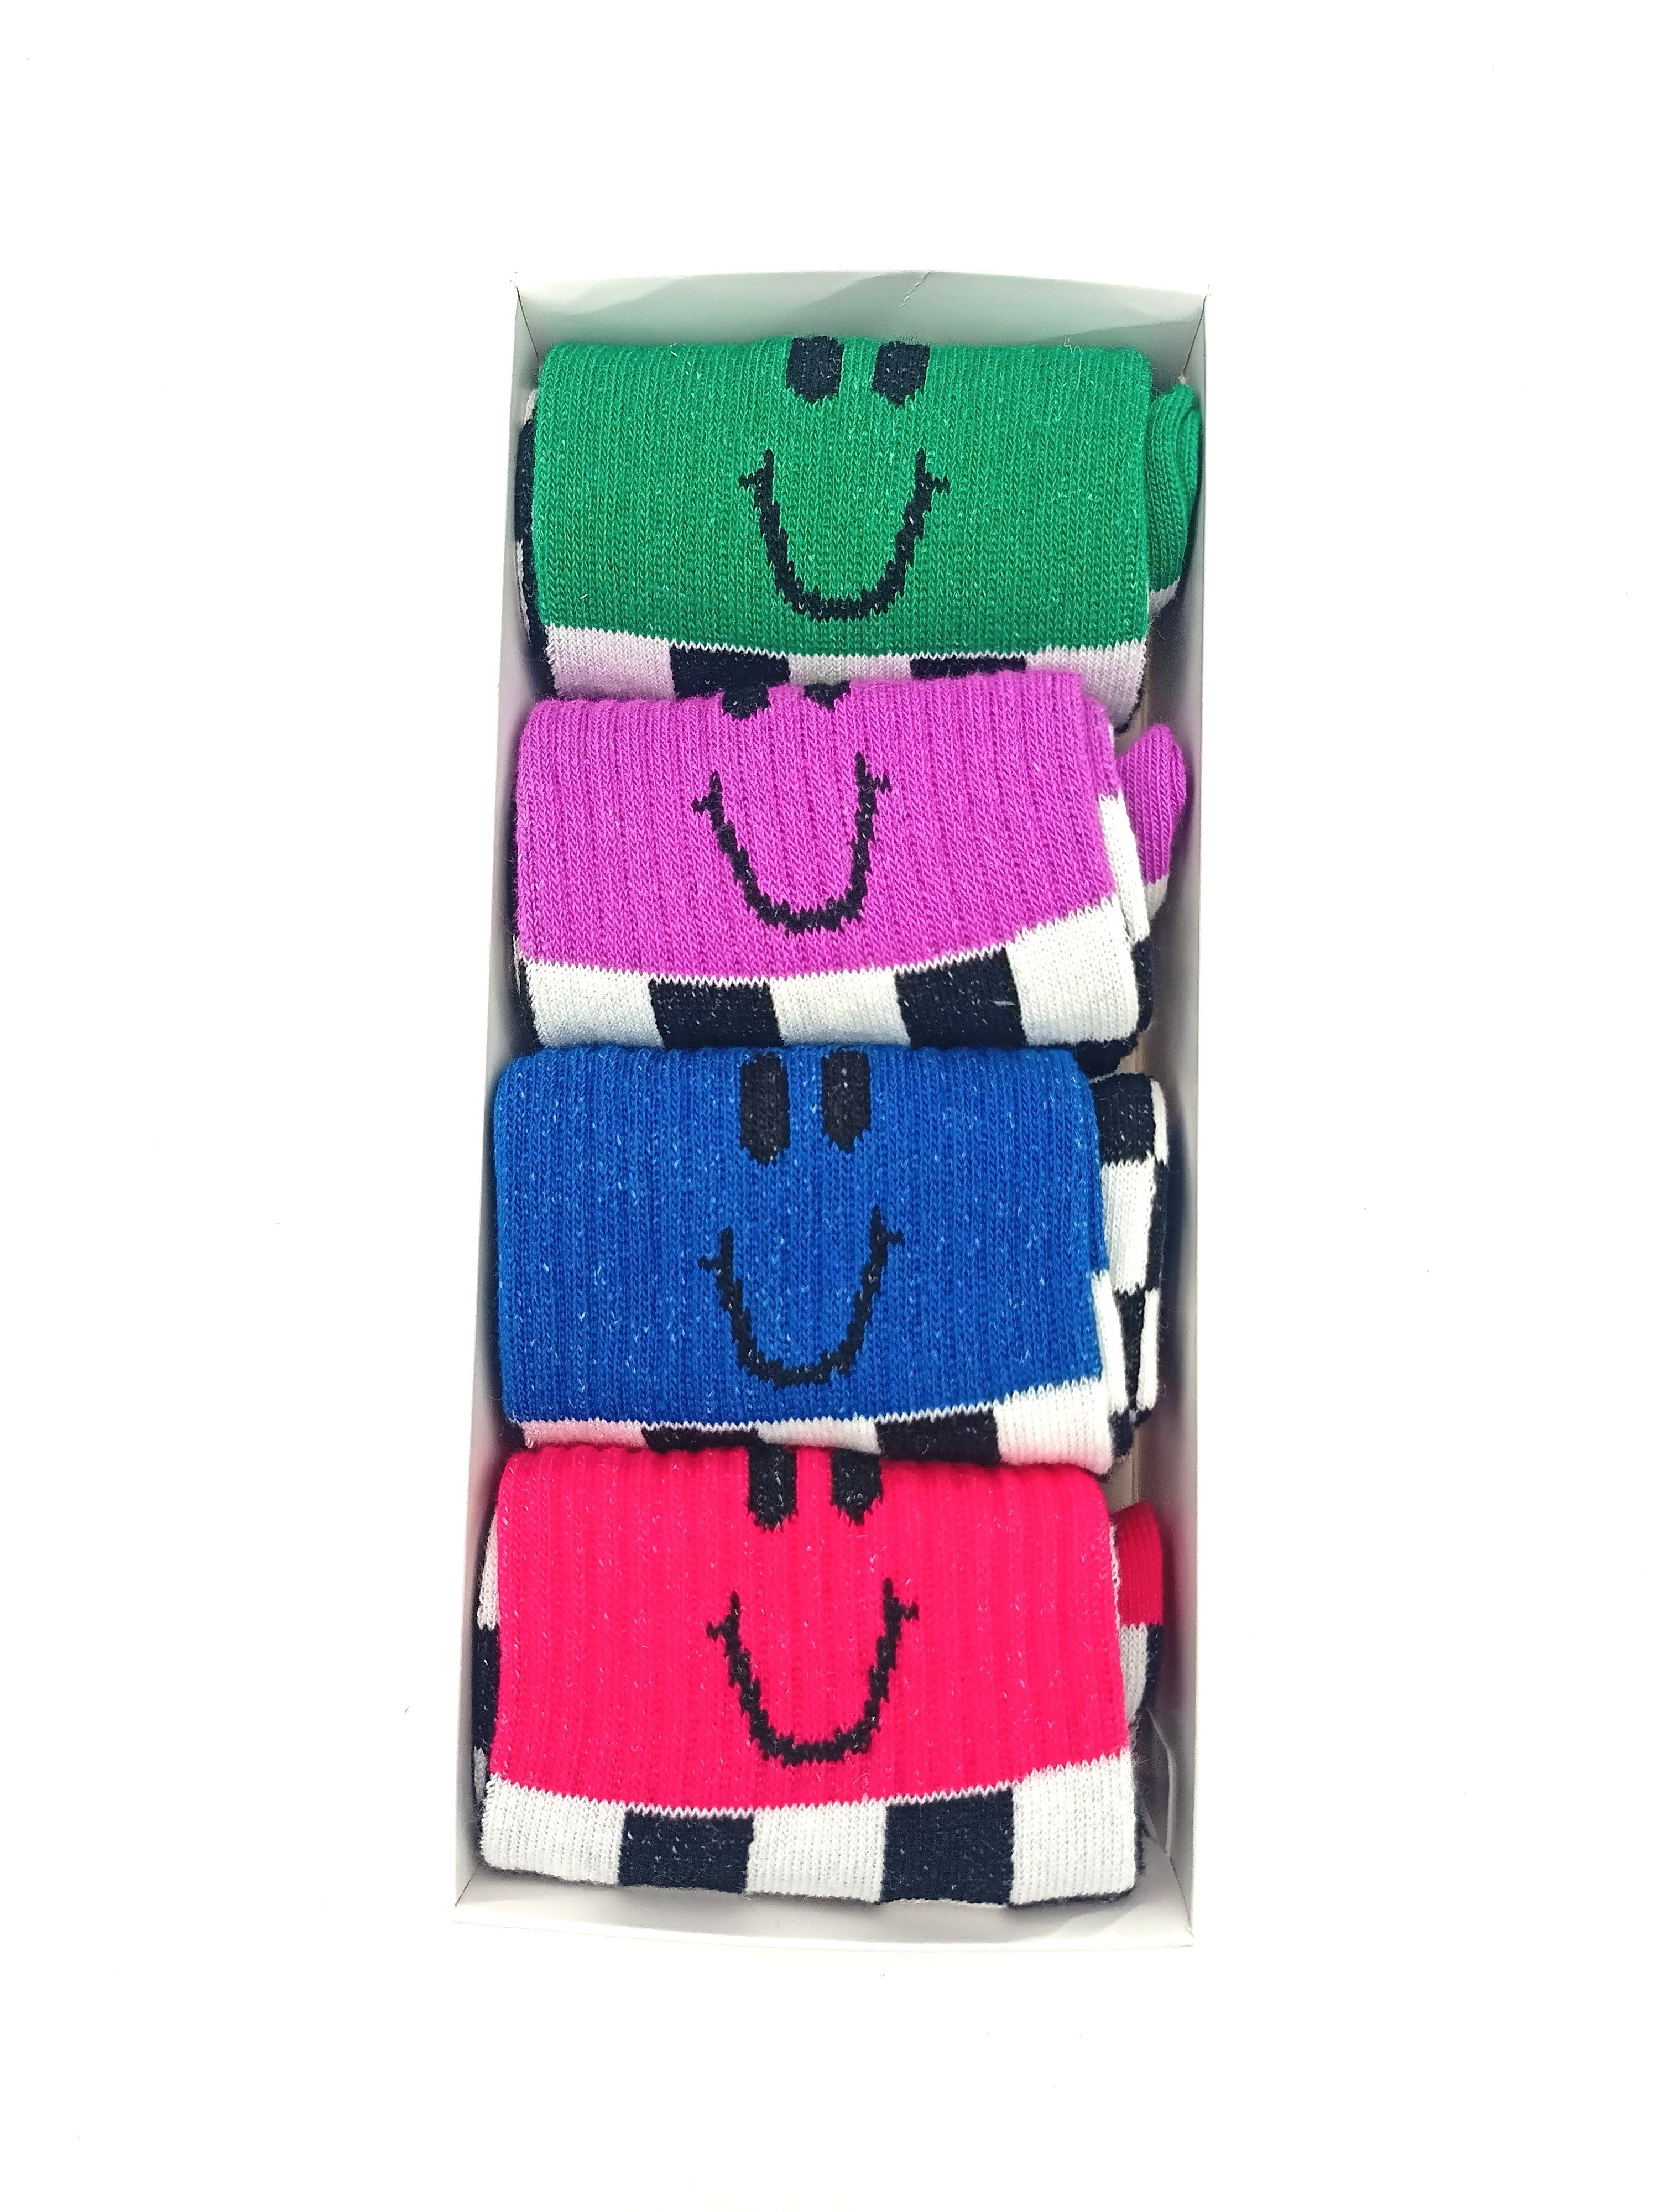 Lustige (Box, Freizeitsocken 4 Paar) Größe Socken, 37-43 NoblesBox Socken Smiley